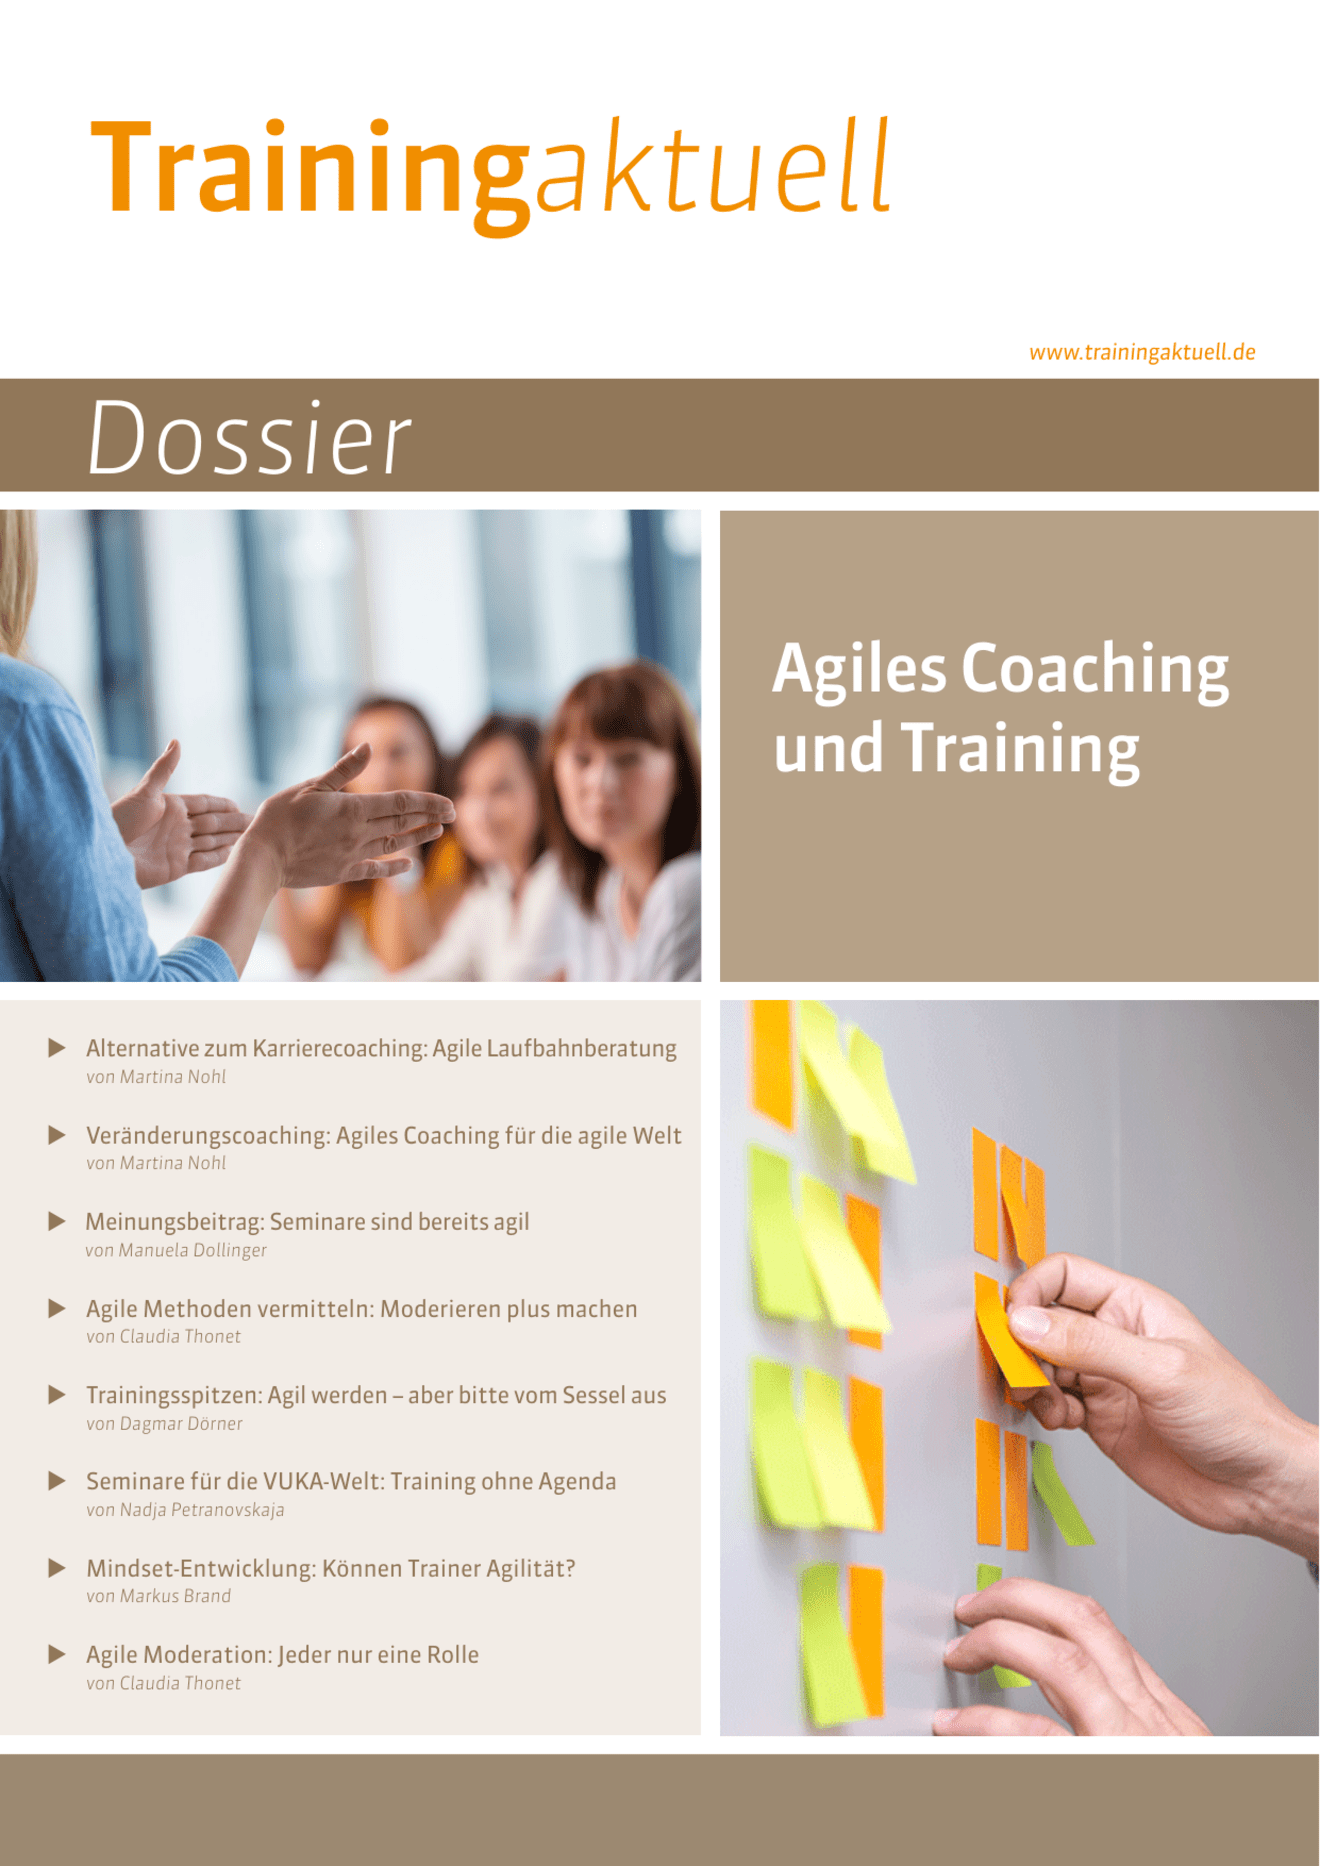 Dossier Agiles Coaching und Training